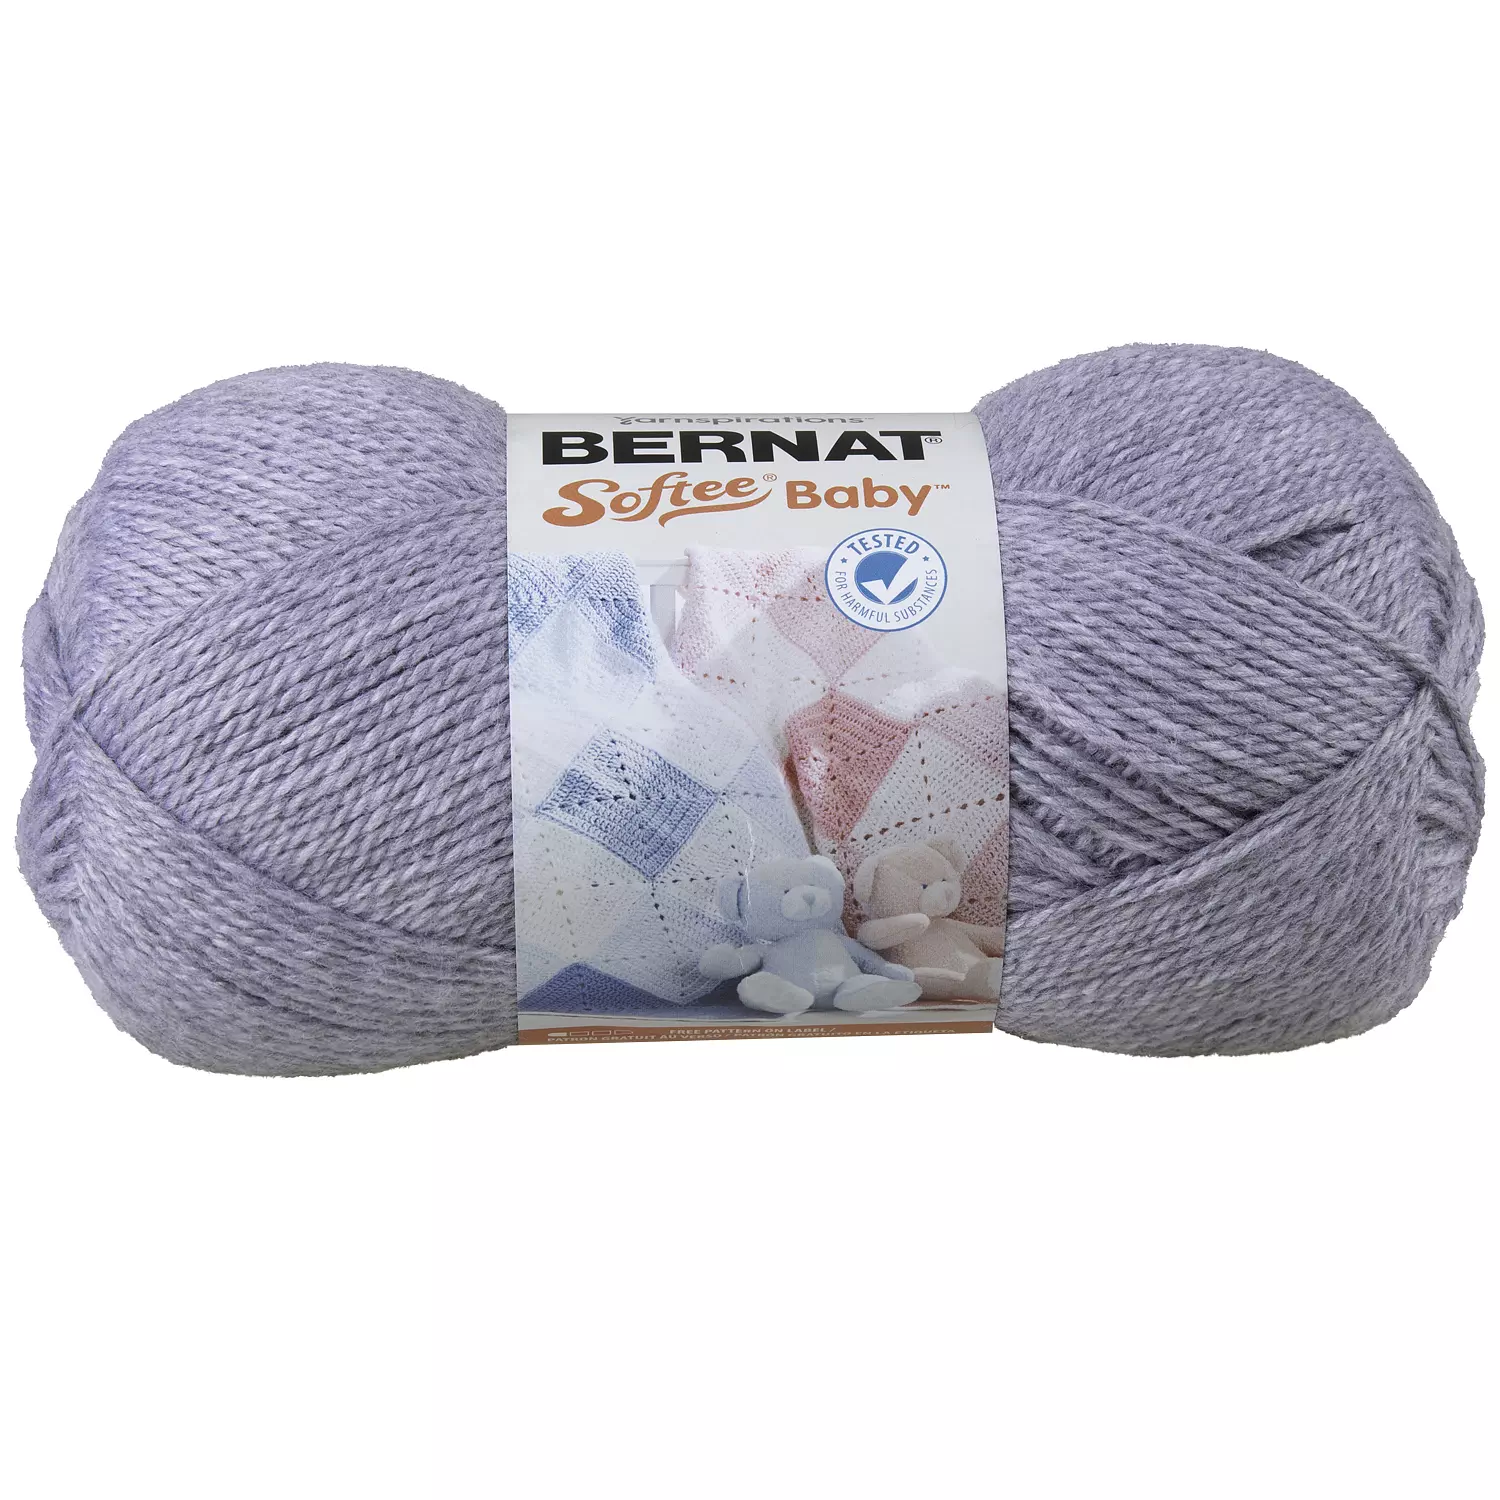 Bernat Softee Baby - Acrylic Baby Yarn, flannel